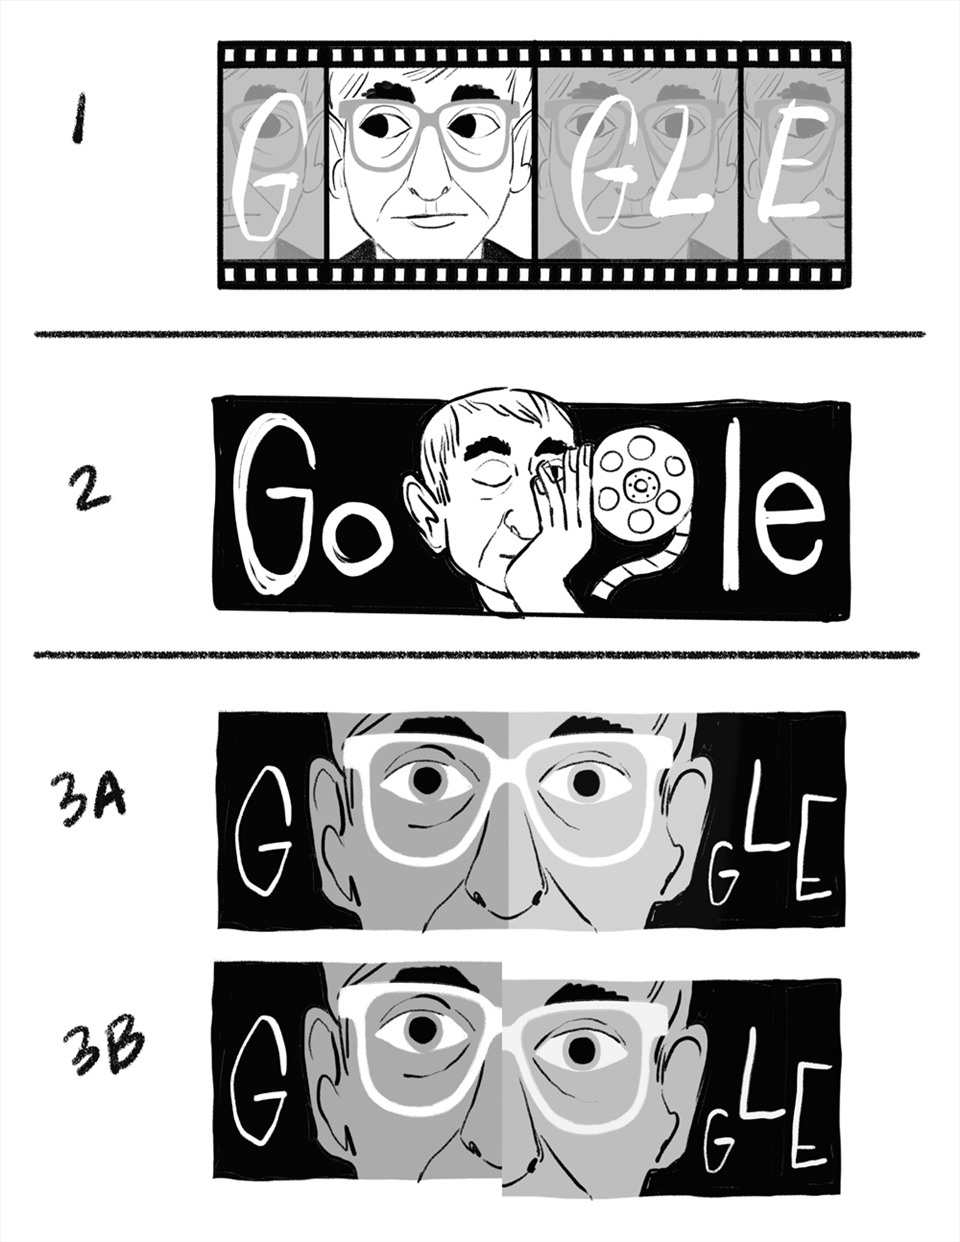 Krzysztof Kieślowski là ai mà được Google Doodle kỷ niệm hôm nay?